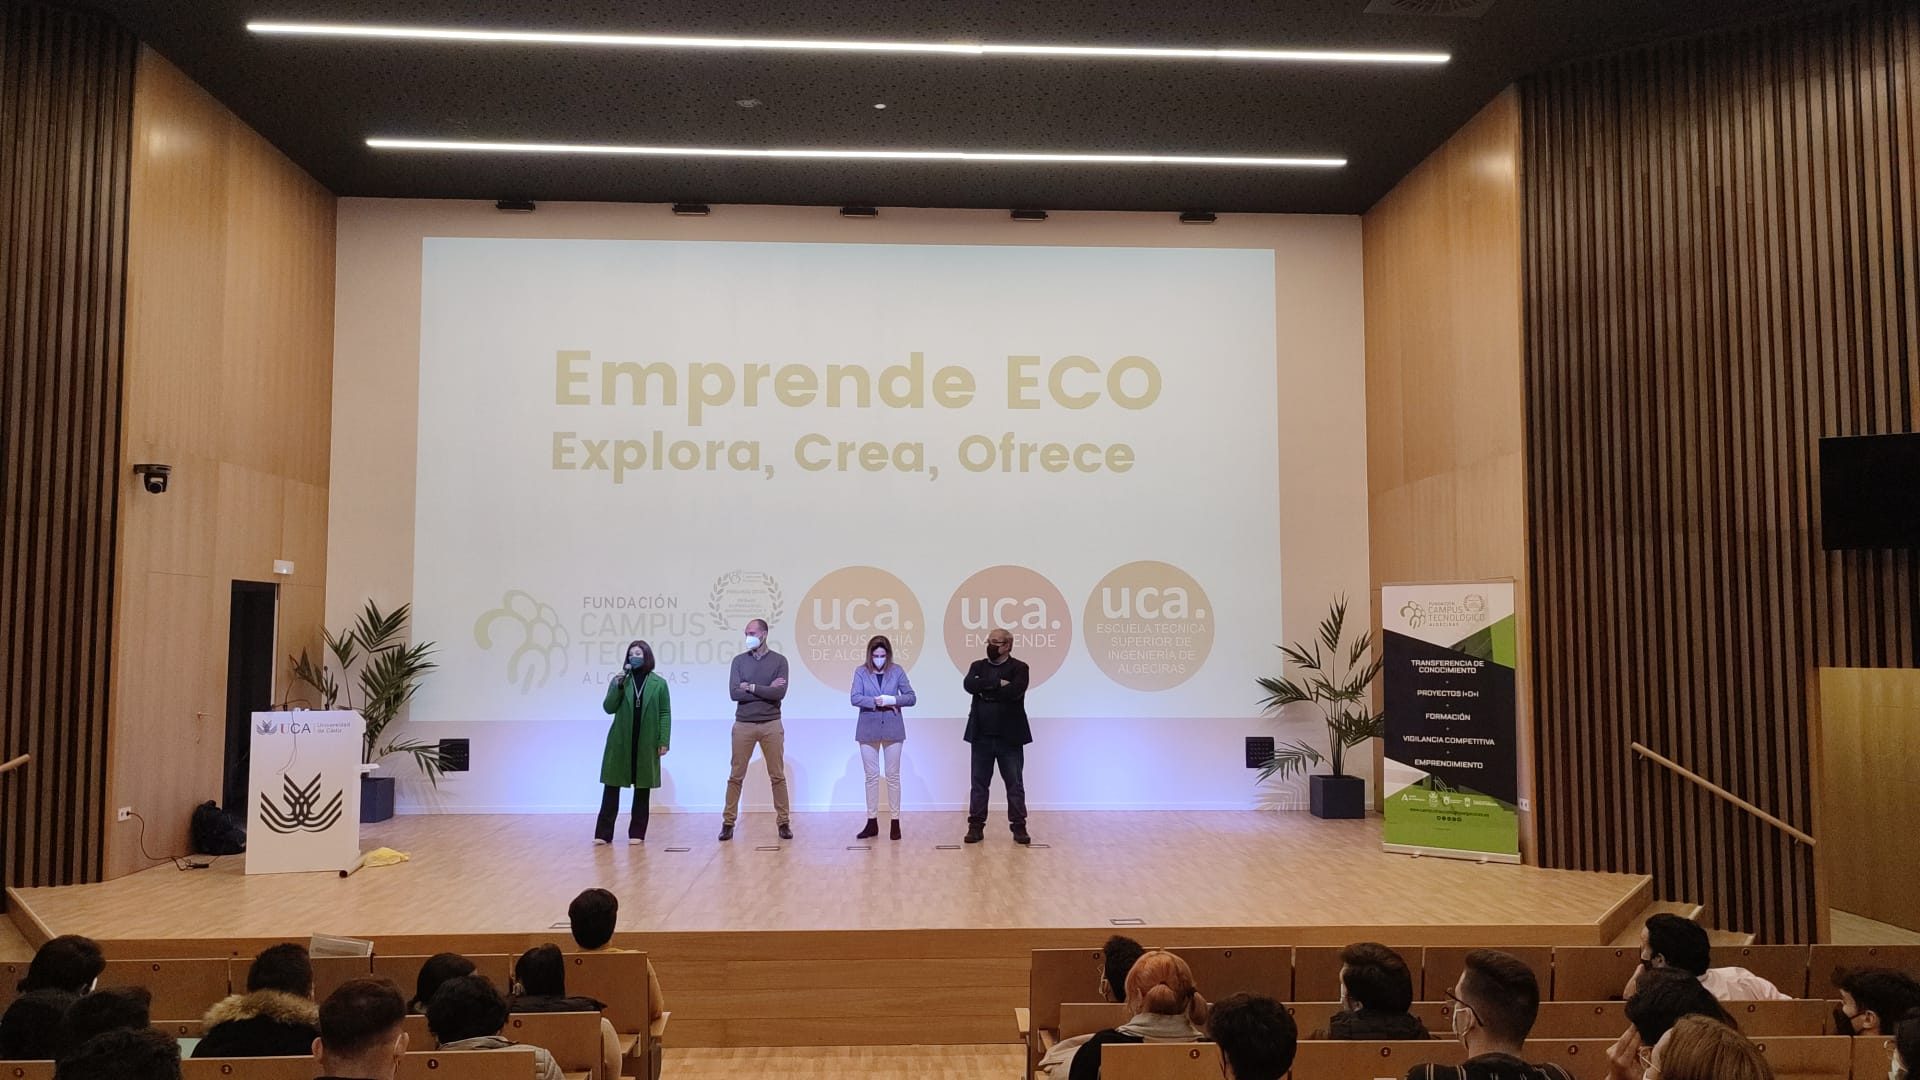 Éxito del evento "Emprende ECO: Explora, Crea, Ofrece"